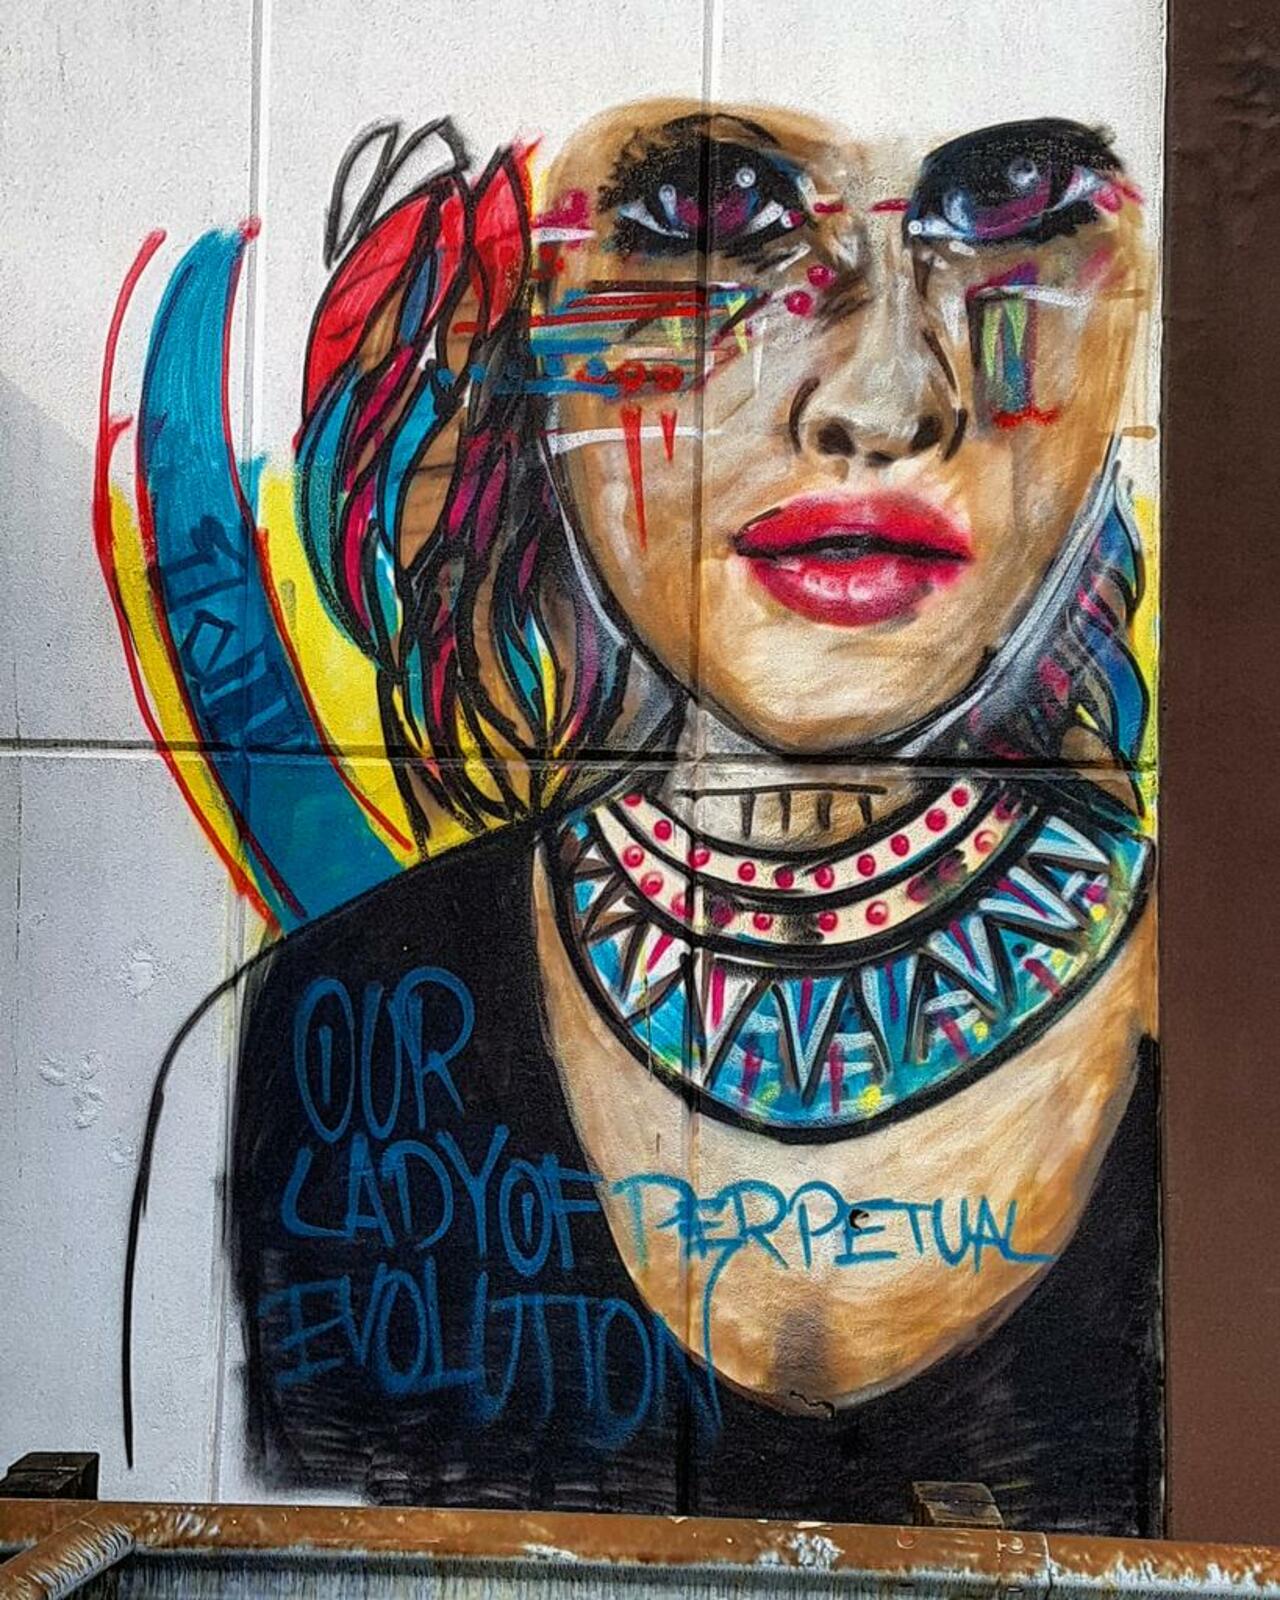 Our Lady of Perpetual Evolution. #juneau #alaska #art #streetart #mural #painting #graffiti https://t.co/HKdvgNxAY5